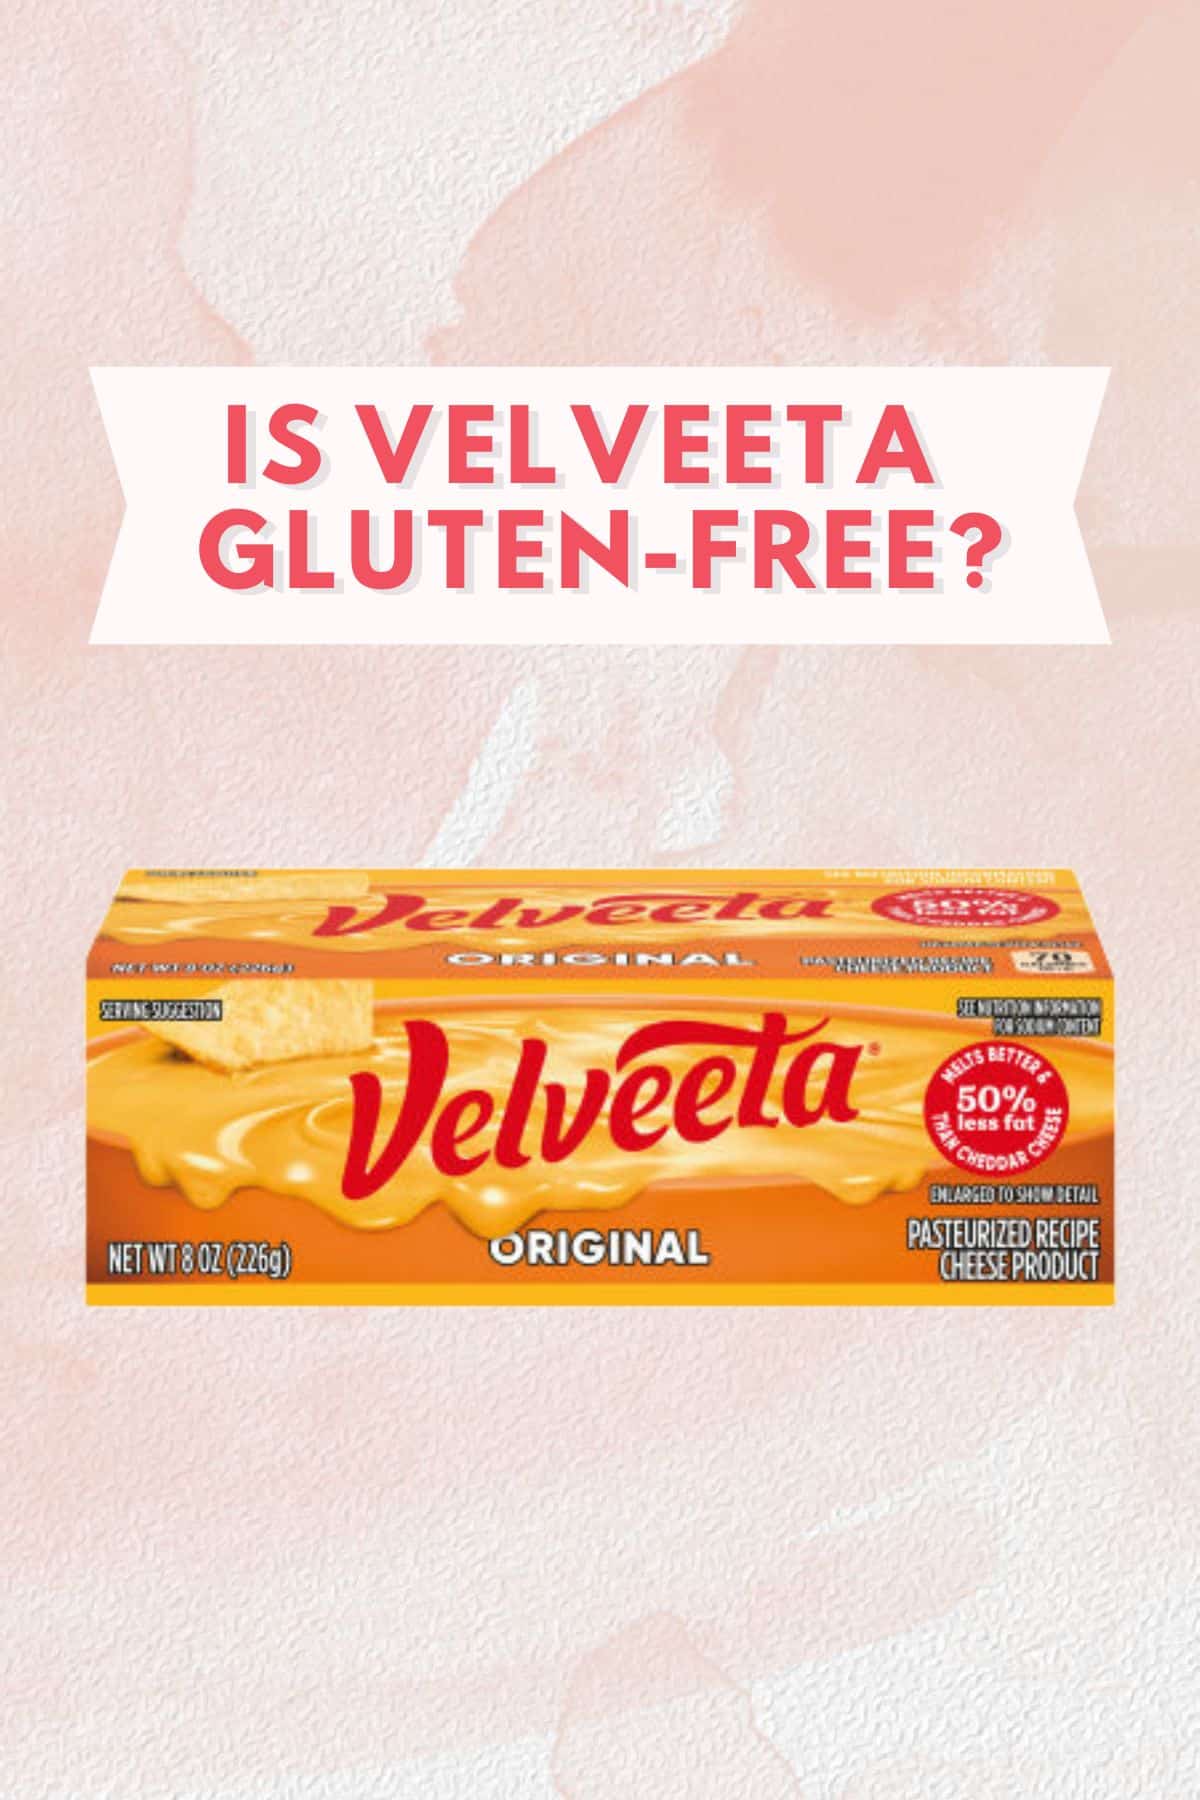 Is Velveeta gluten-free? and Velveeta package on pink background.